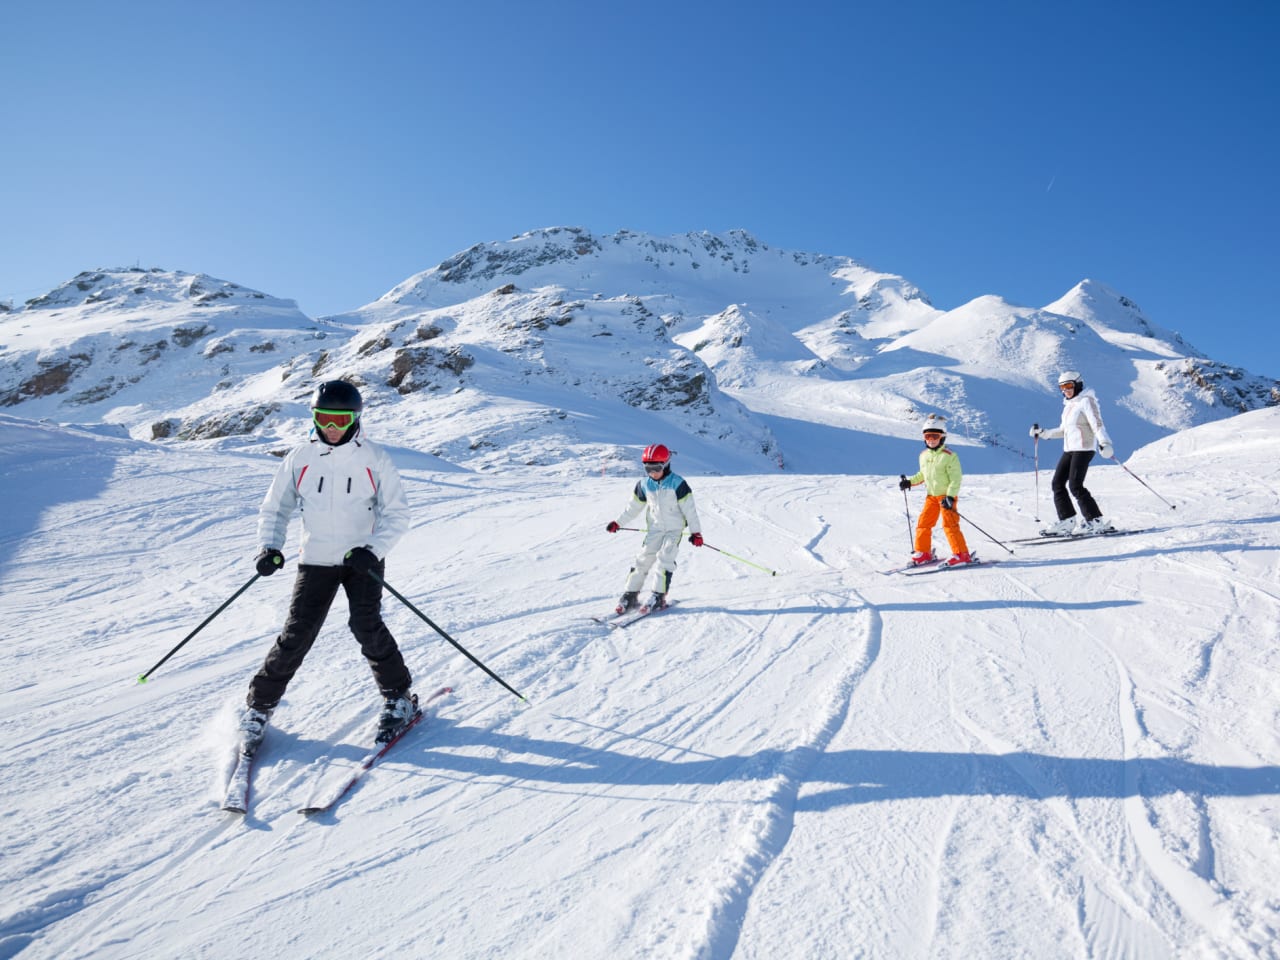 Famile beim Skifahren, Obereggern © amriphoto/E+ via Getty Images